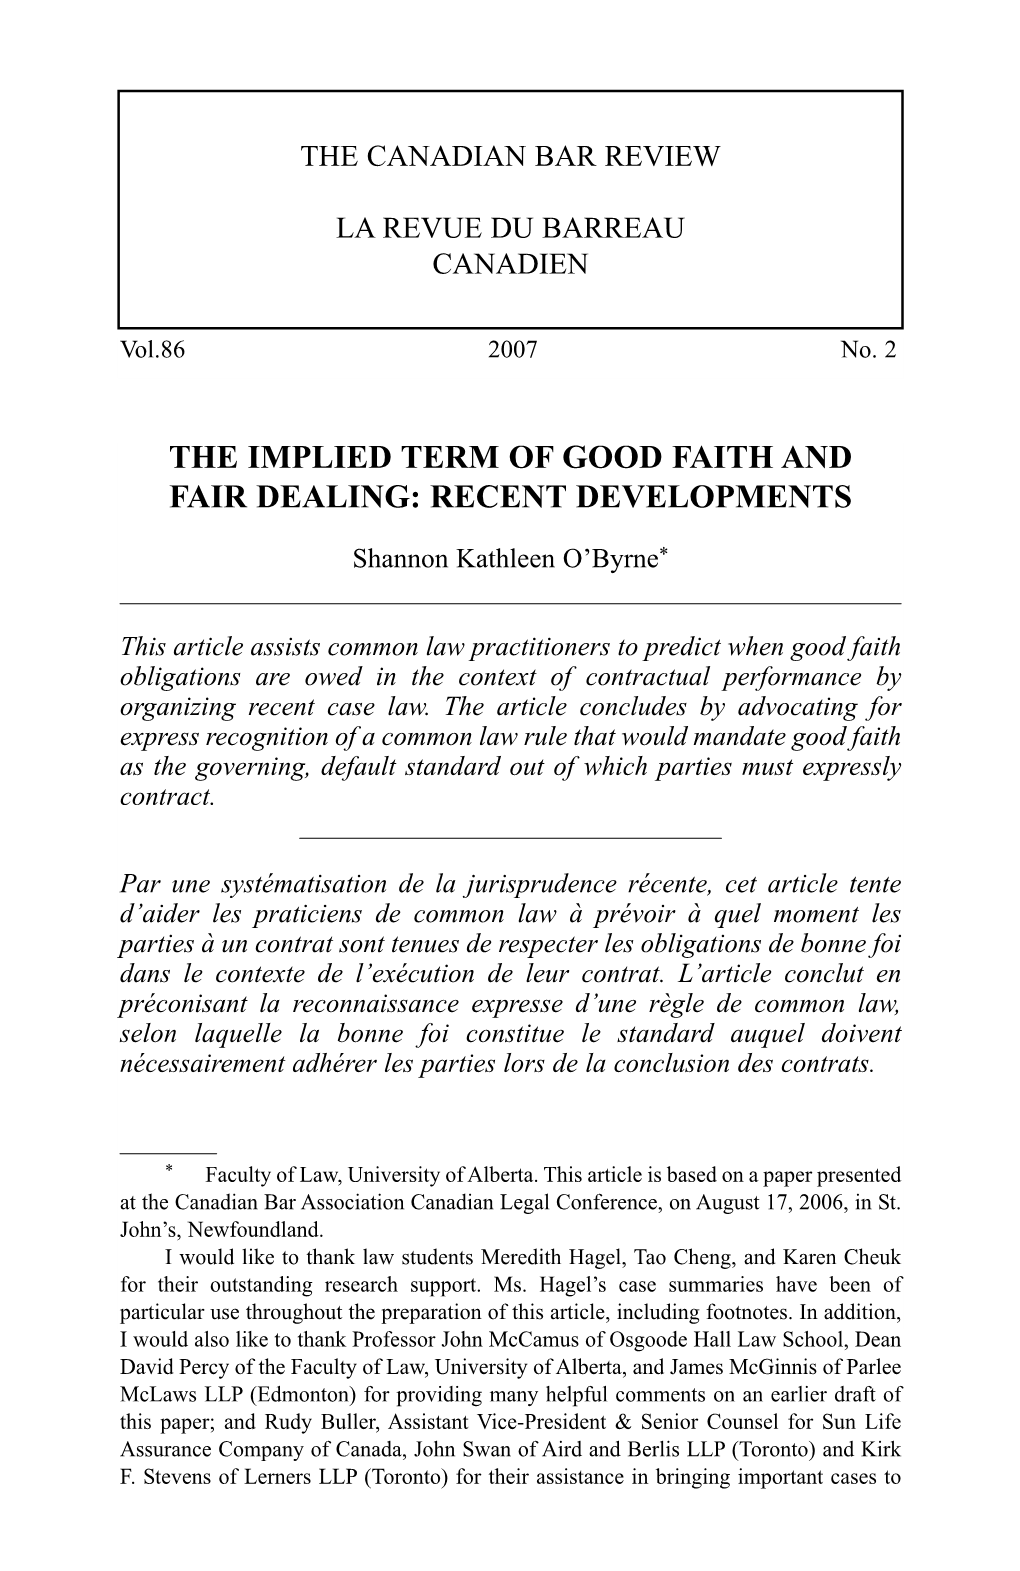 The Implied Term of Good Faith and Fair Dealing: Recent Developments